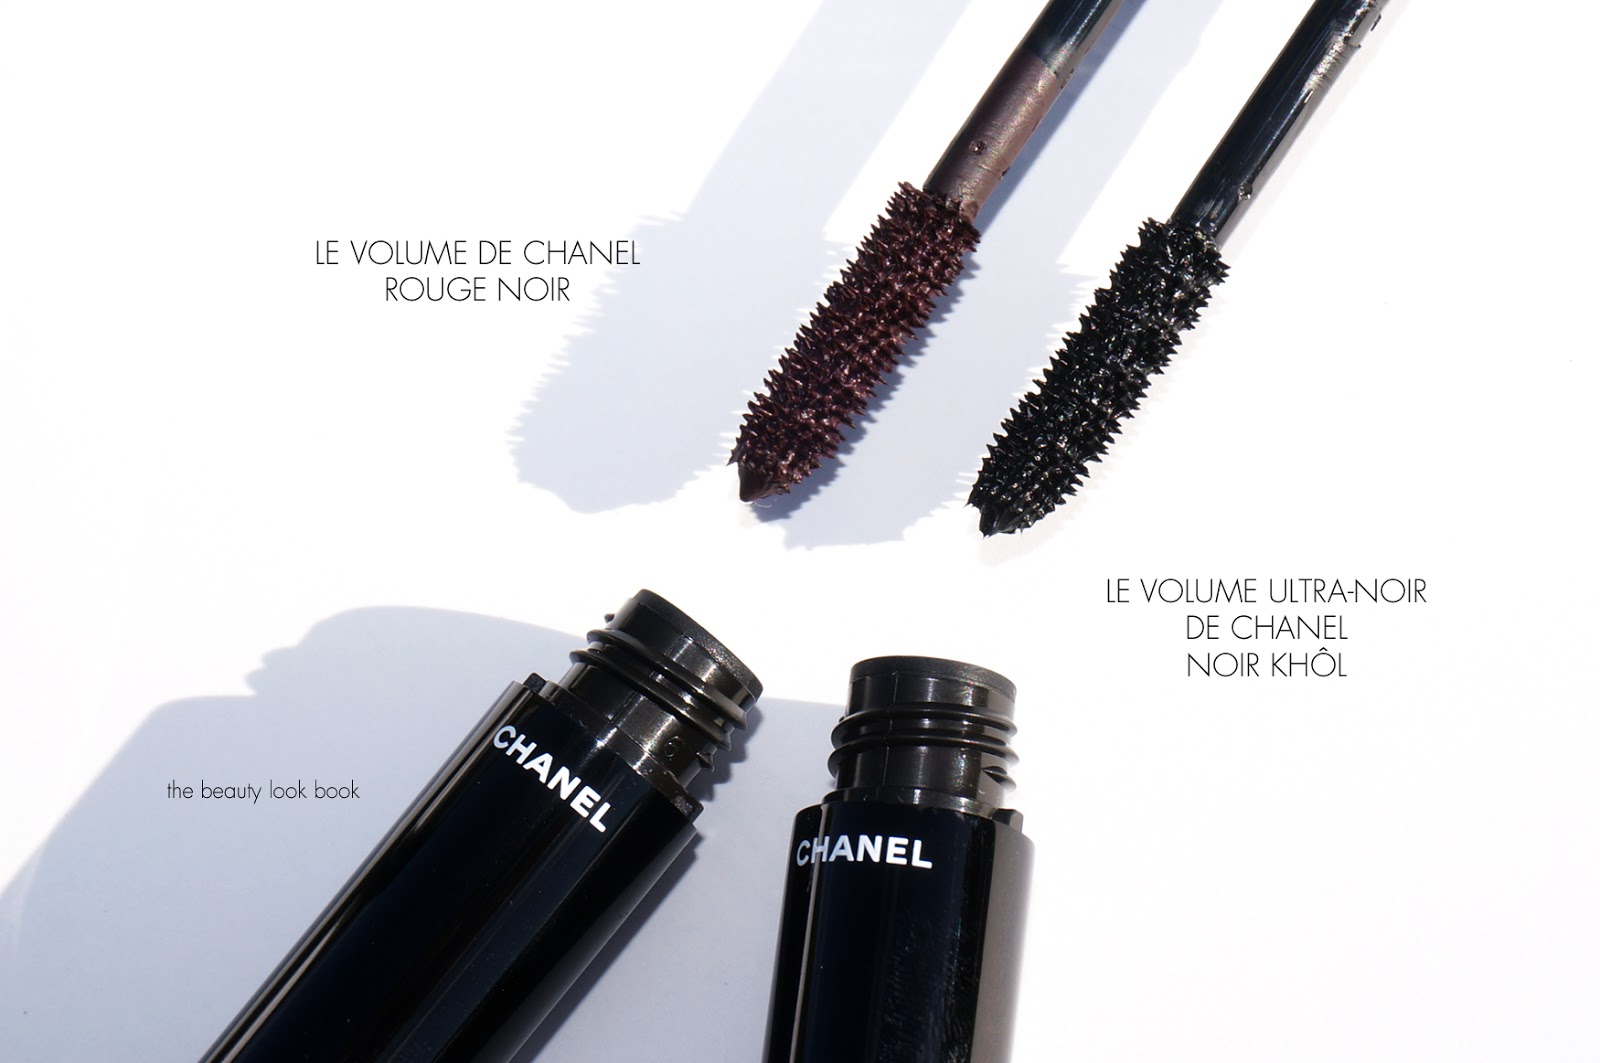 Chanel Le Volume Mascara Review*